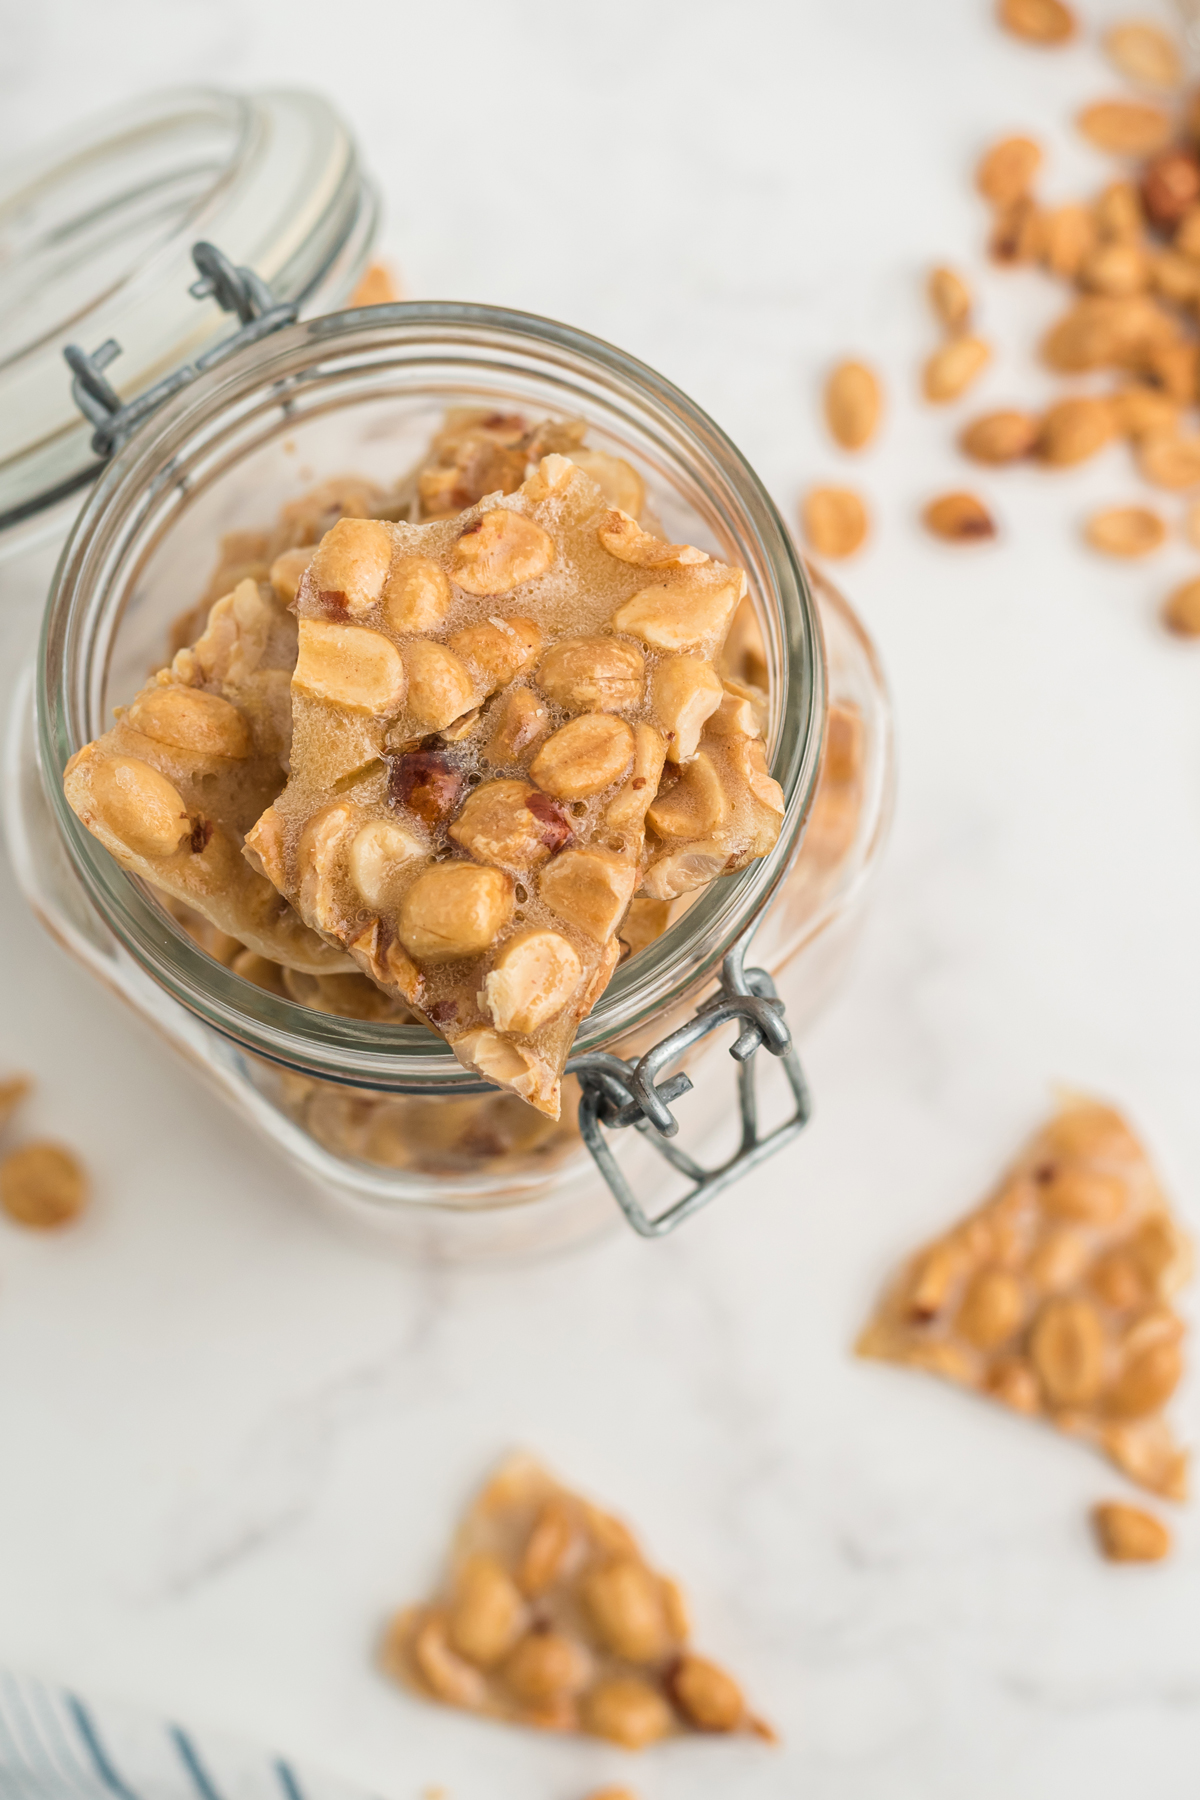 Microwave peanut brittle pieces on a jar